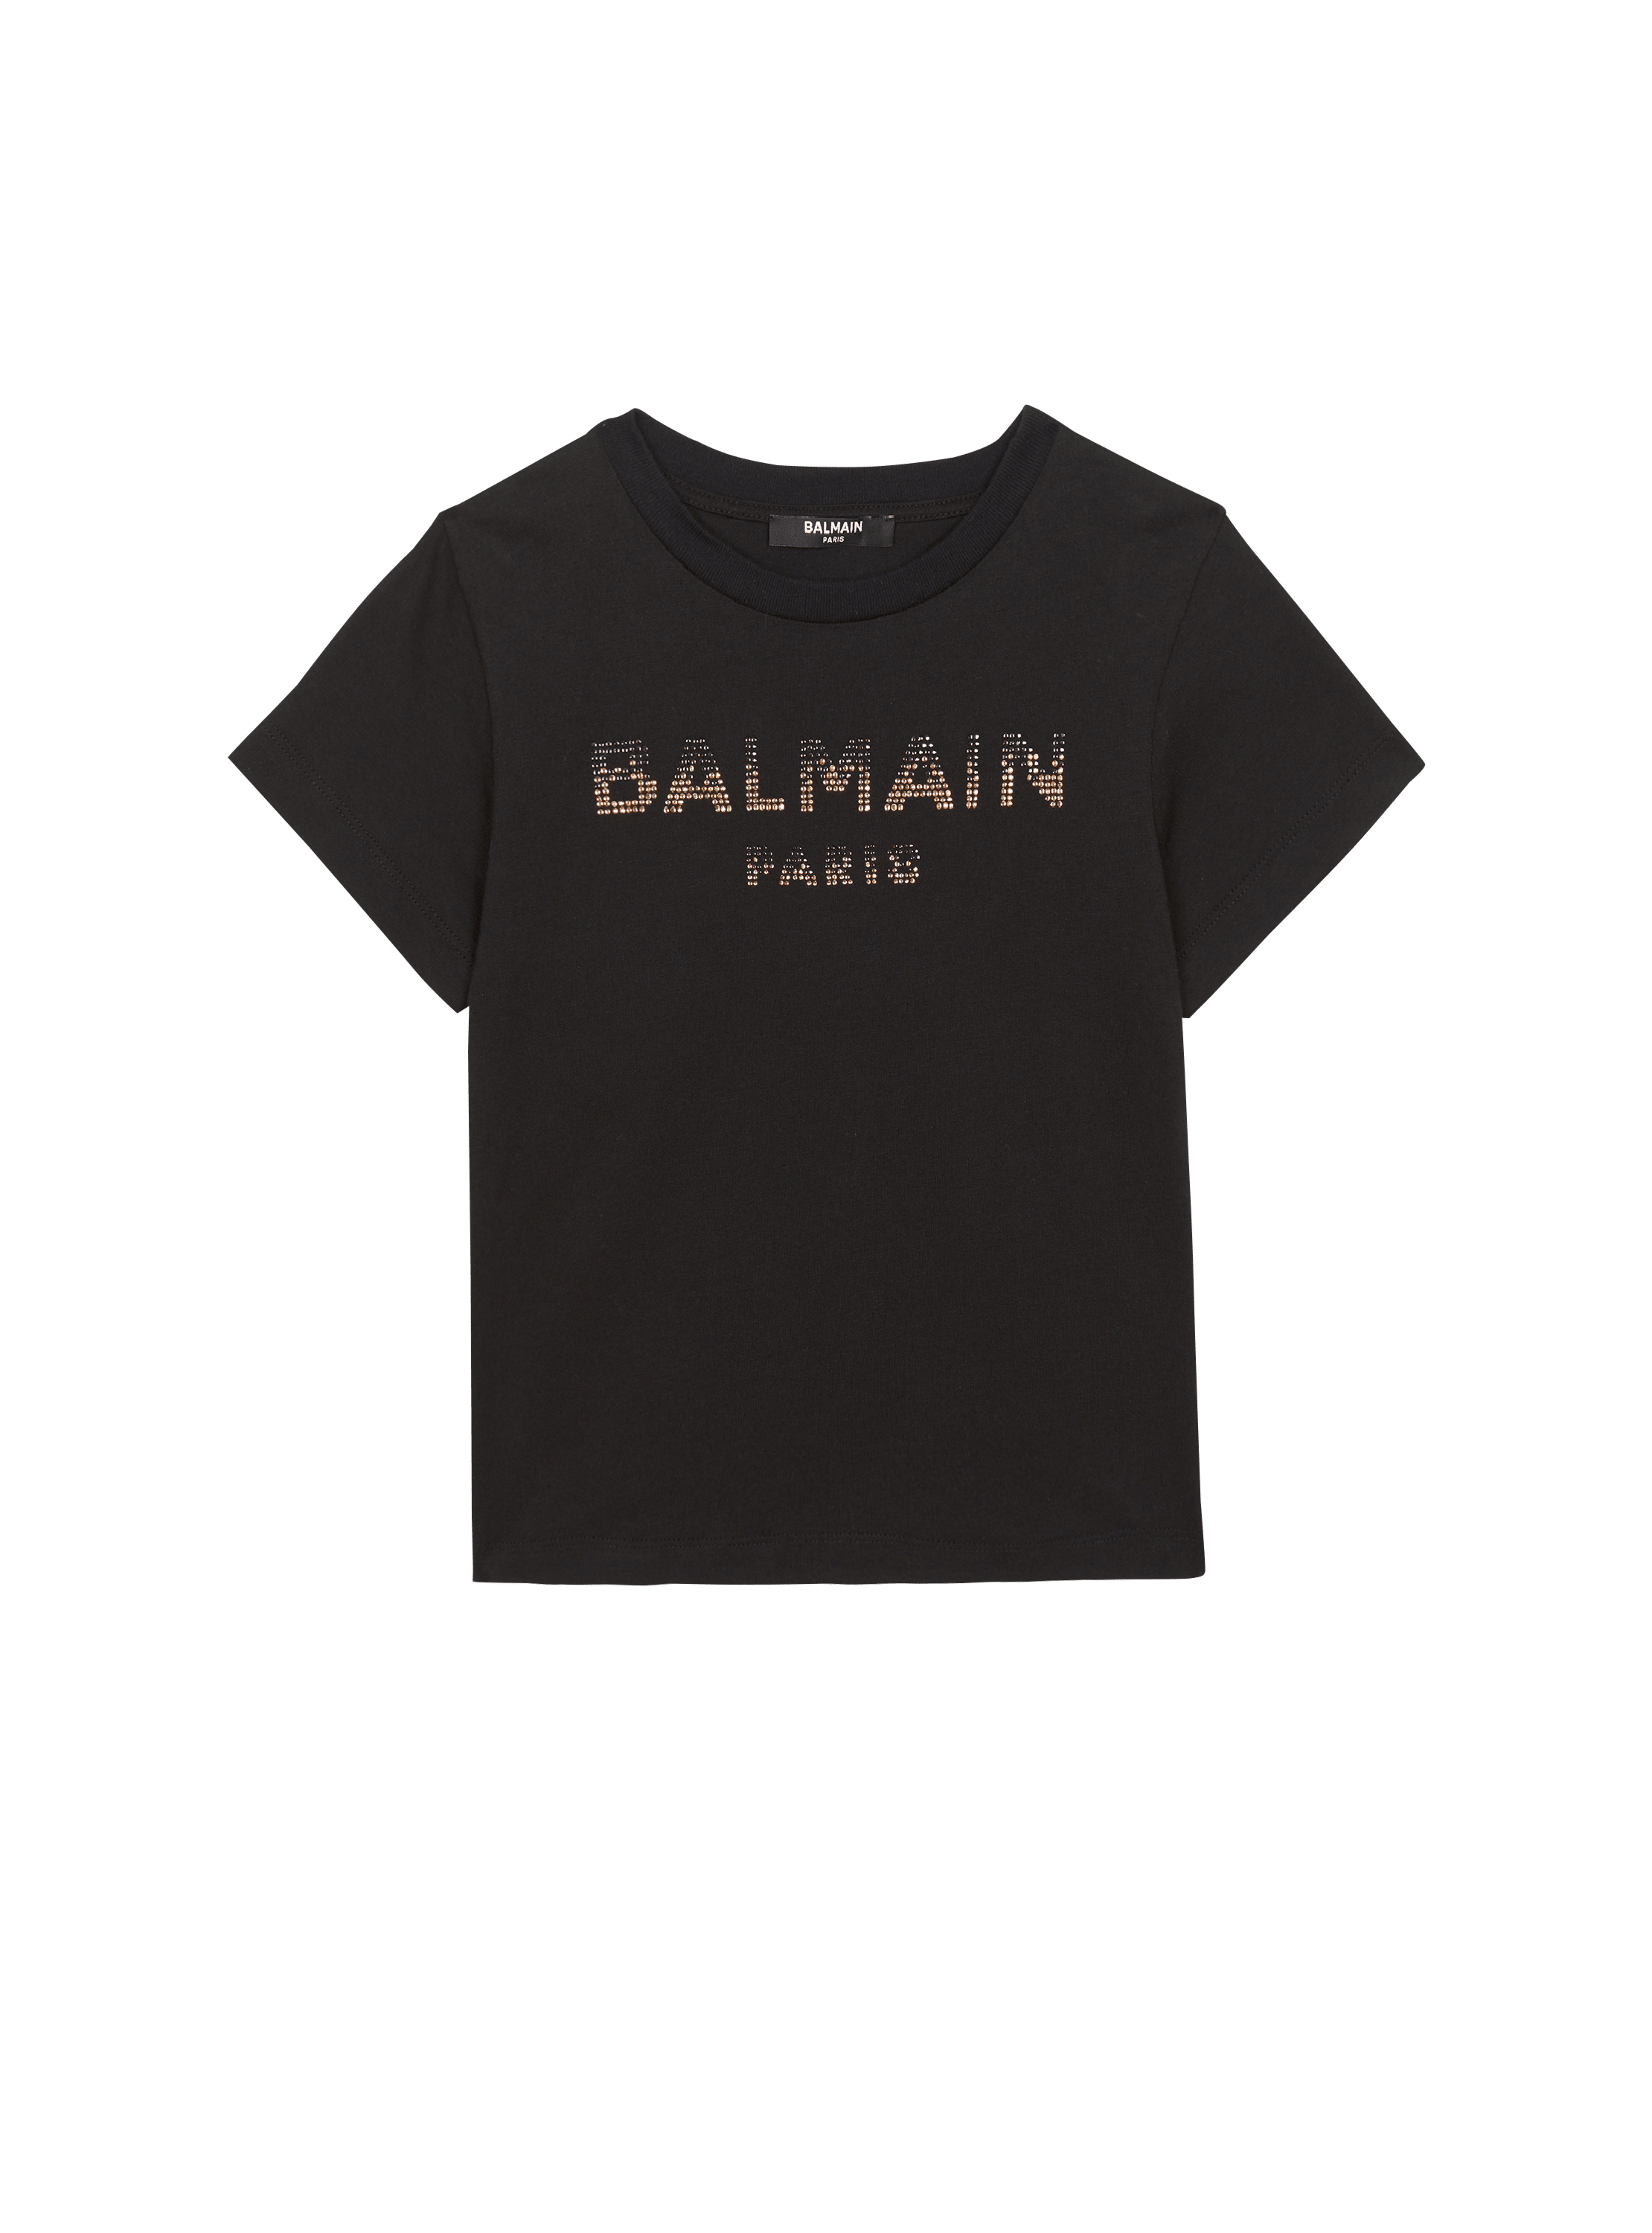 Balmain Paris T-shirt black - Child | BALMAIN